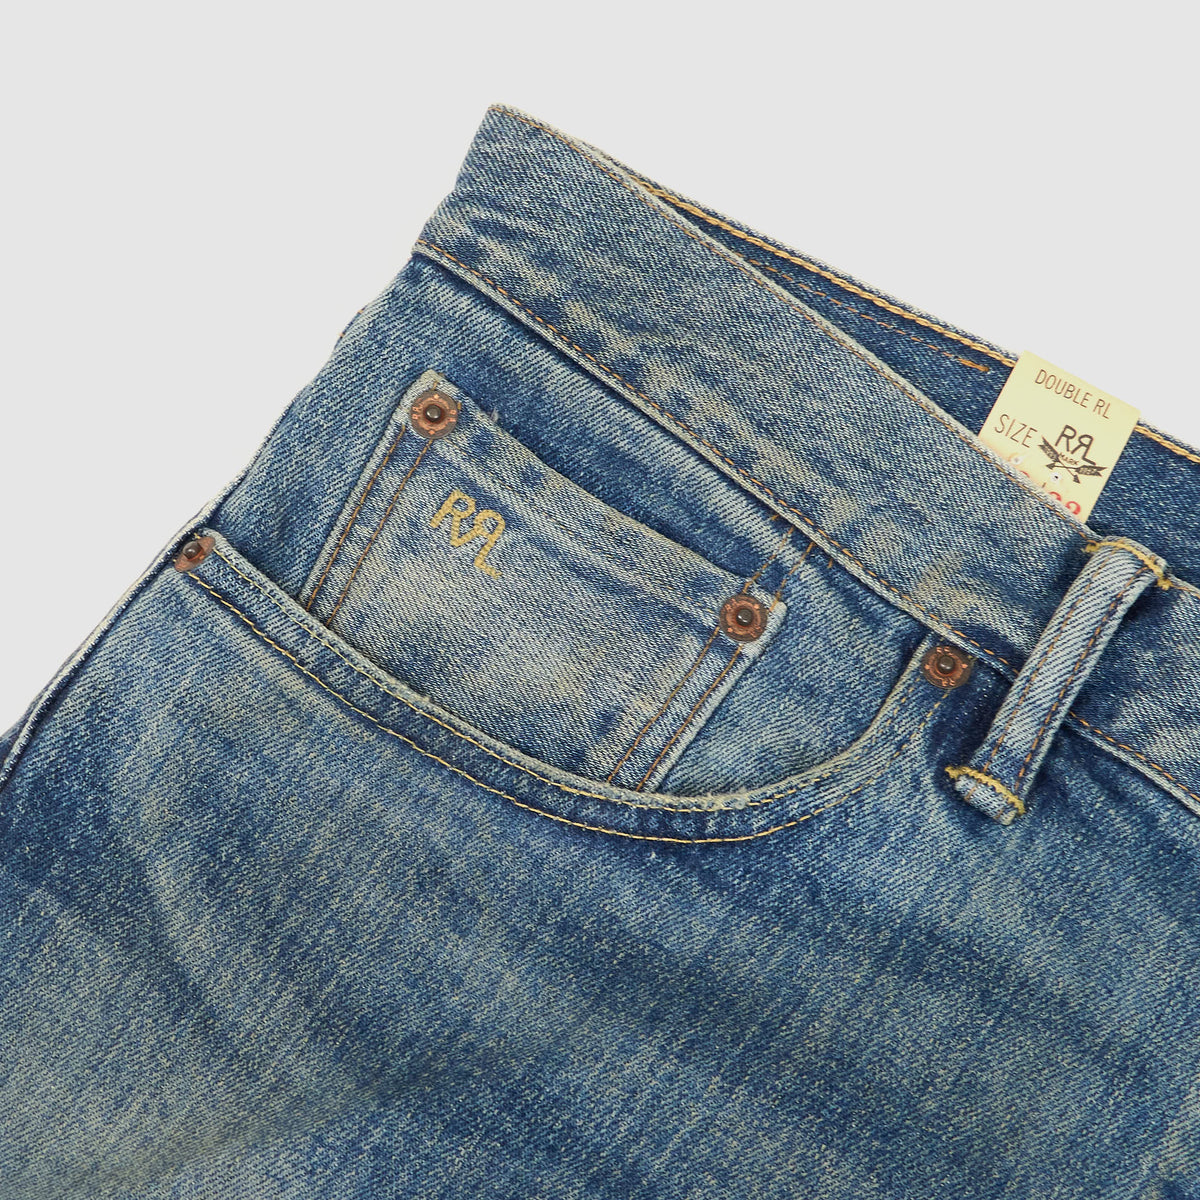 Double RL Slim Narrow Denim Jeans (Stone Washed)